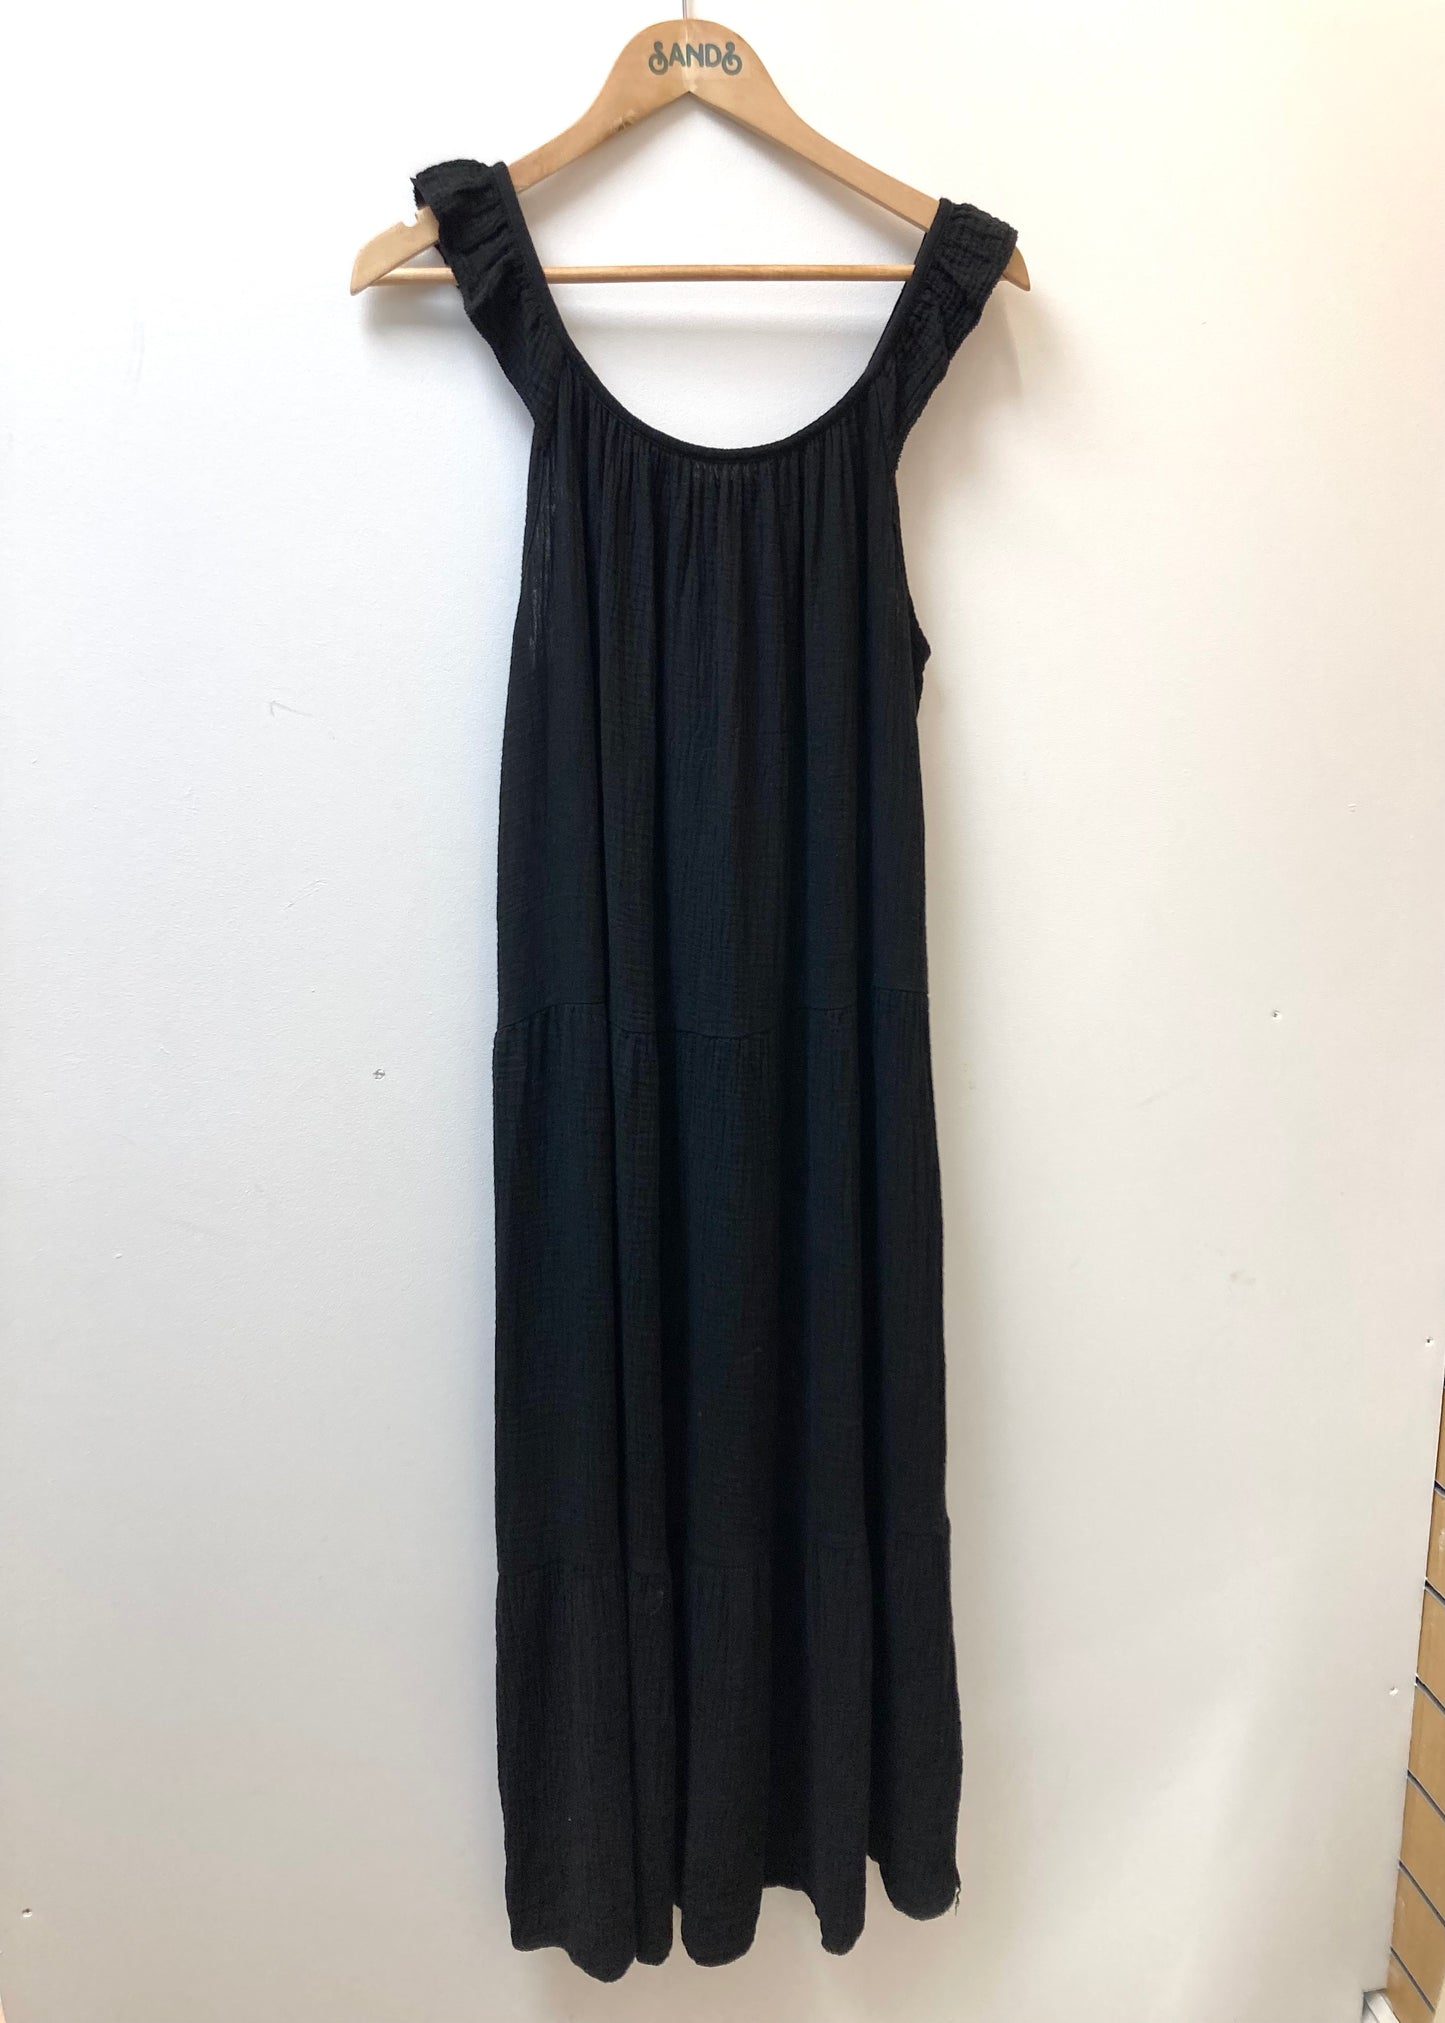 Sands - Cotton Frill Maxi Dress / Black